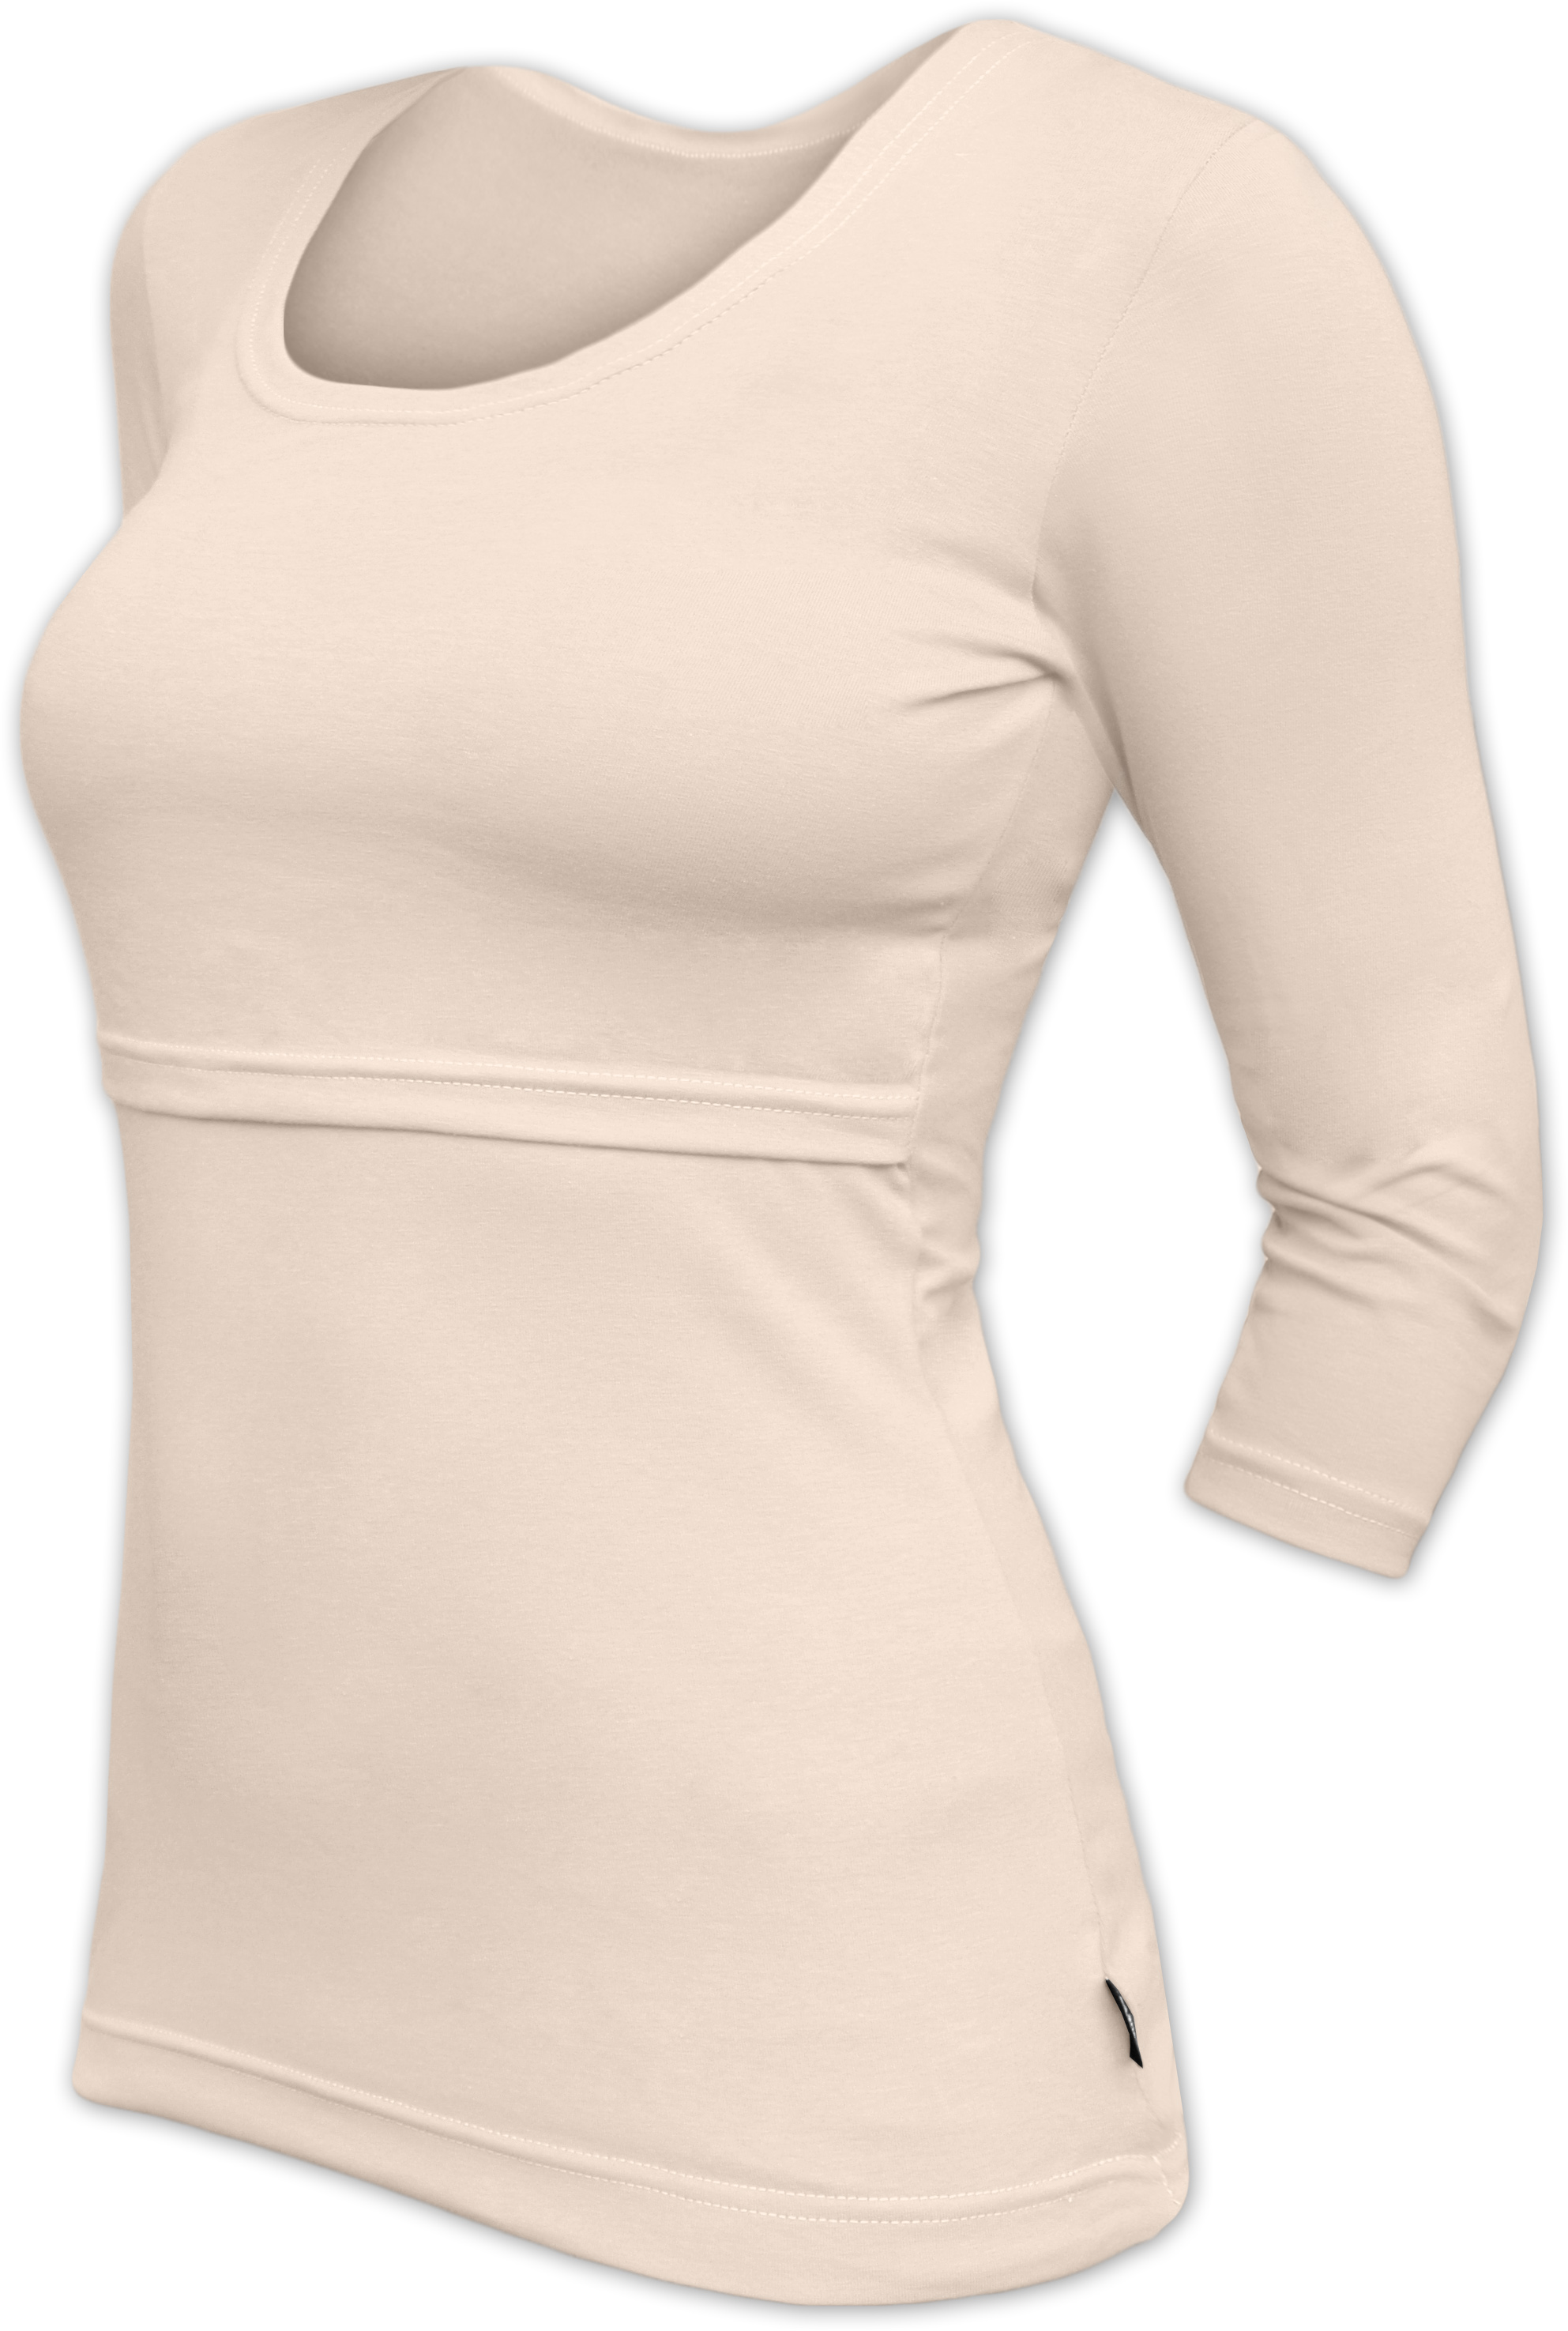 Breast-feeding T-shirt 01 Katerina, 3/4 sleeves, CAFFE LATTE